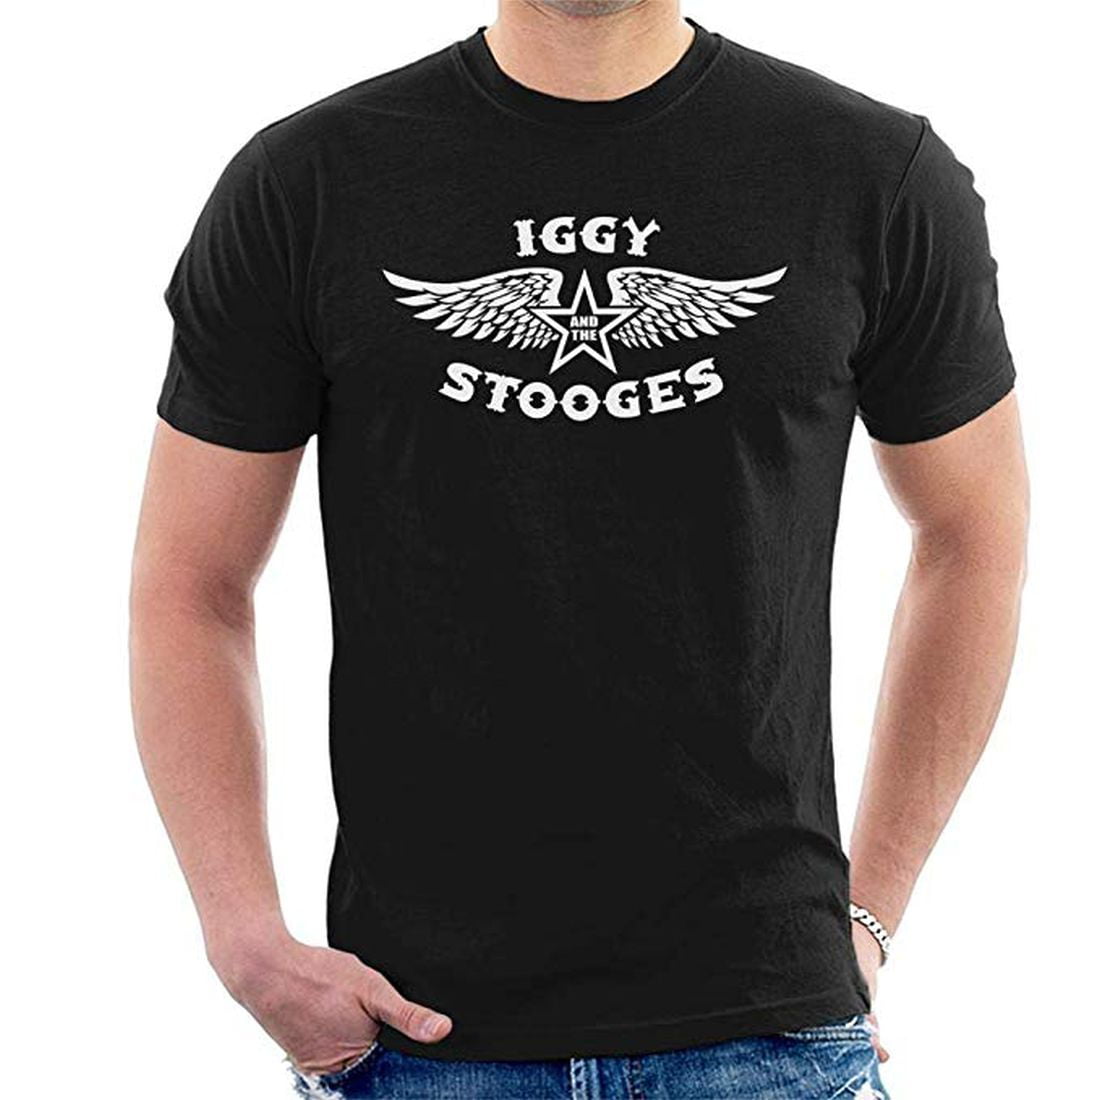 Iggy Pop Iggy /& The Stooges T Shirt Mens Licensed Rock N Roll Band Tee New Black